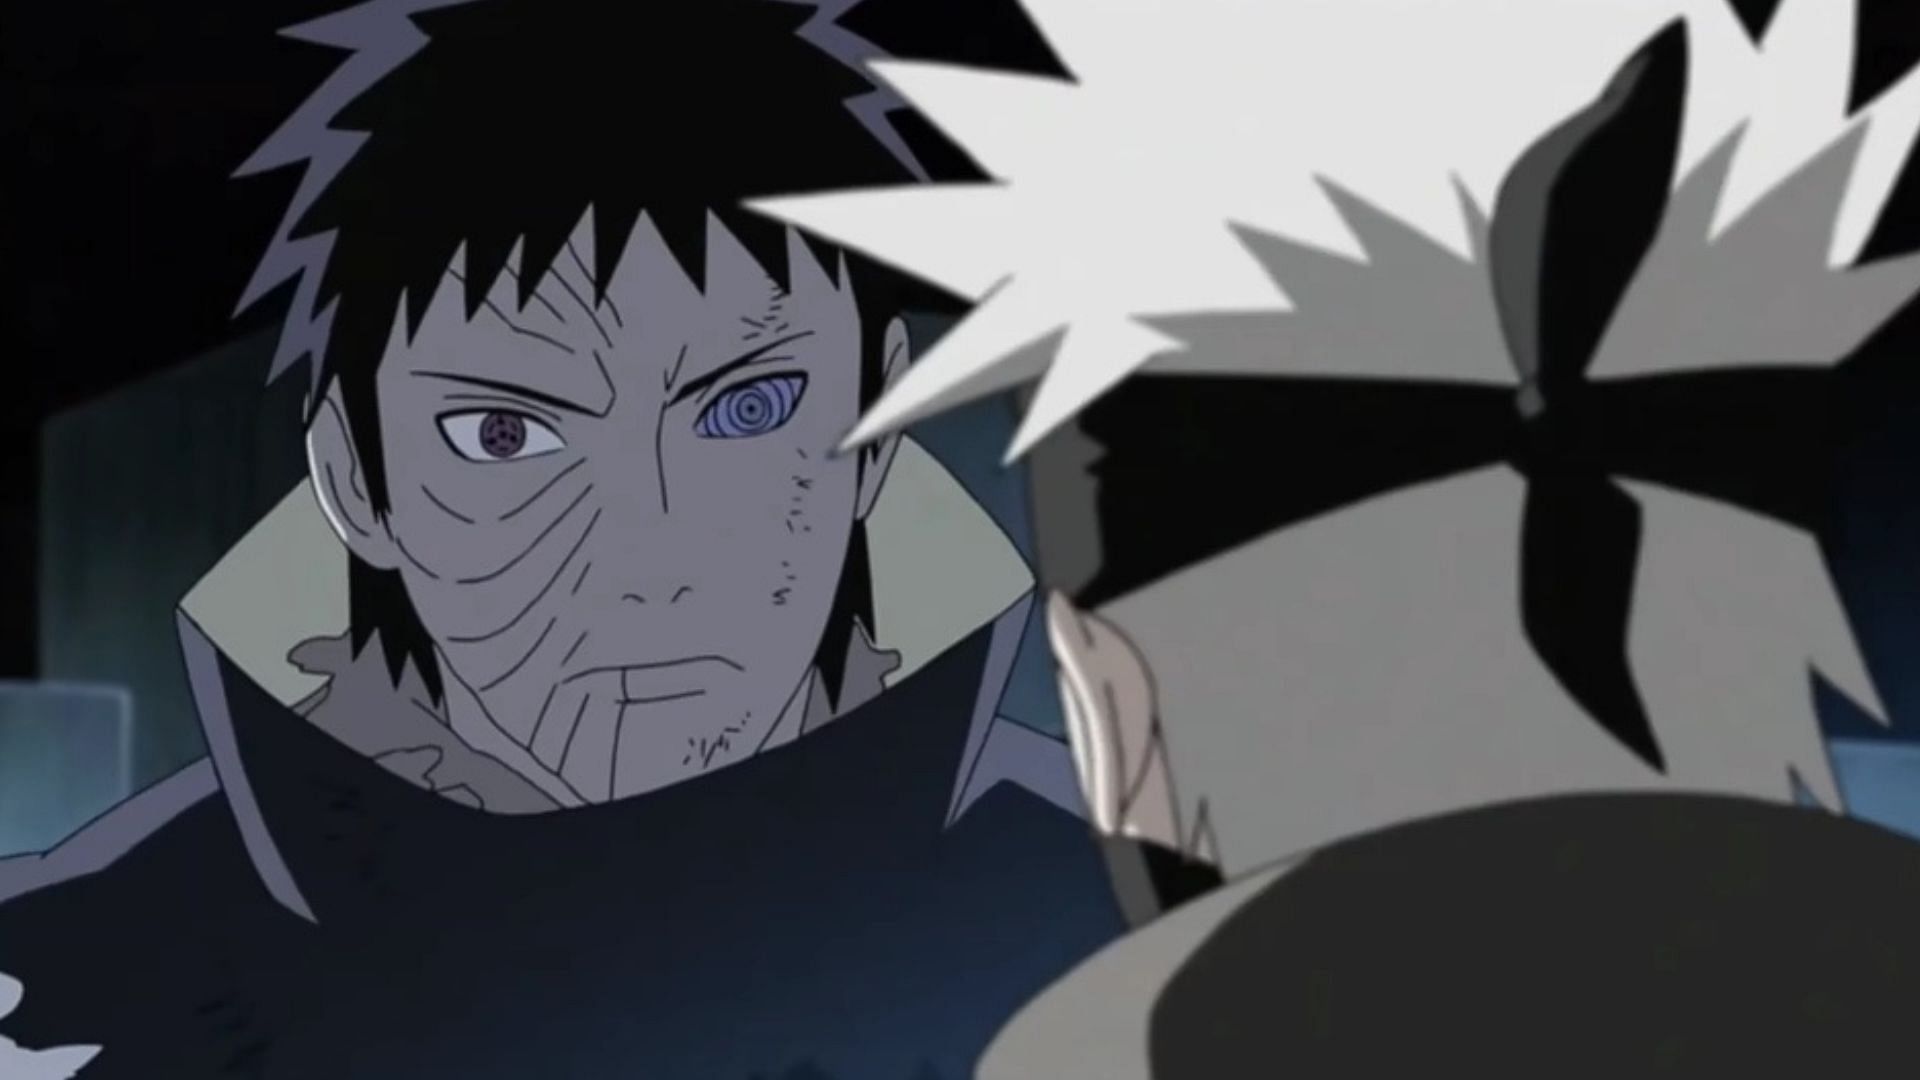 Obito Uchiha as seen in the anime Naruto (Image via Studio Pierrot)